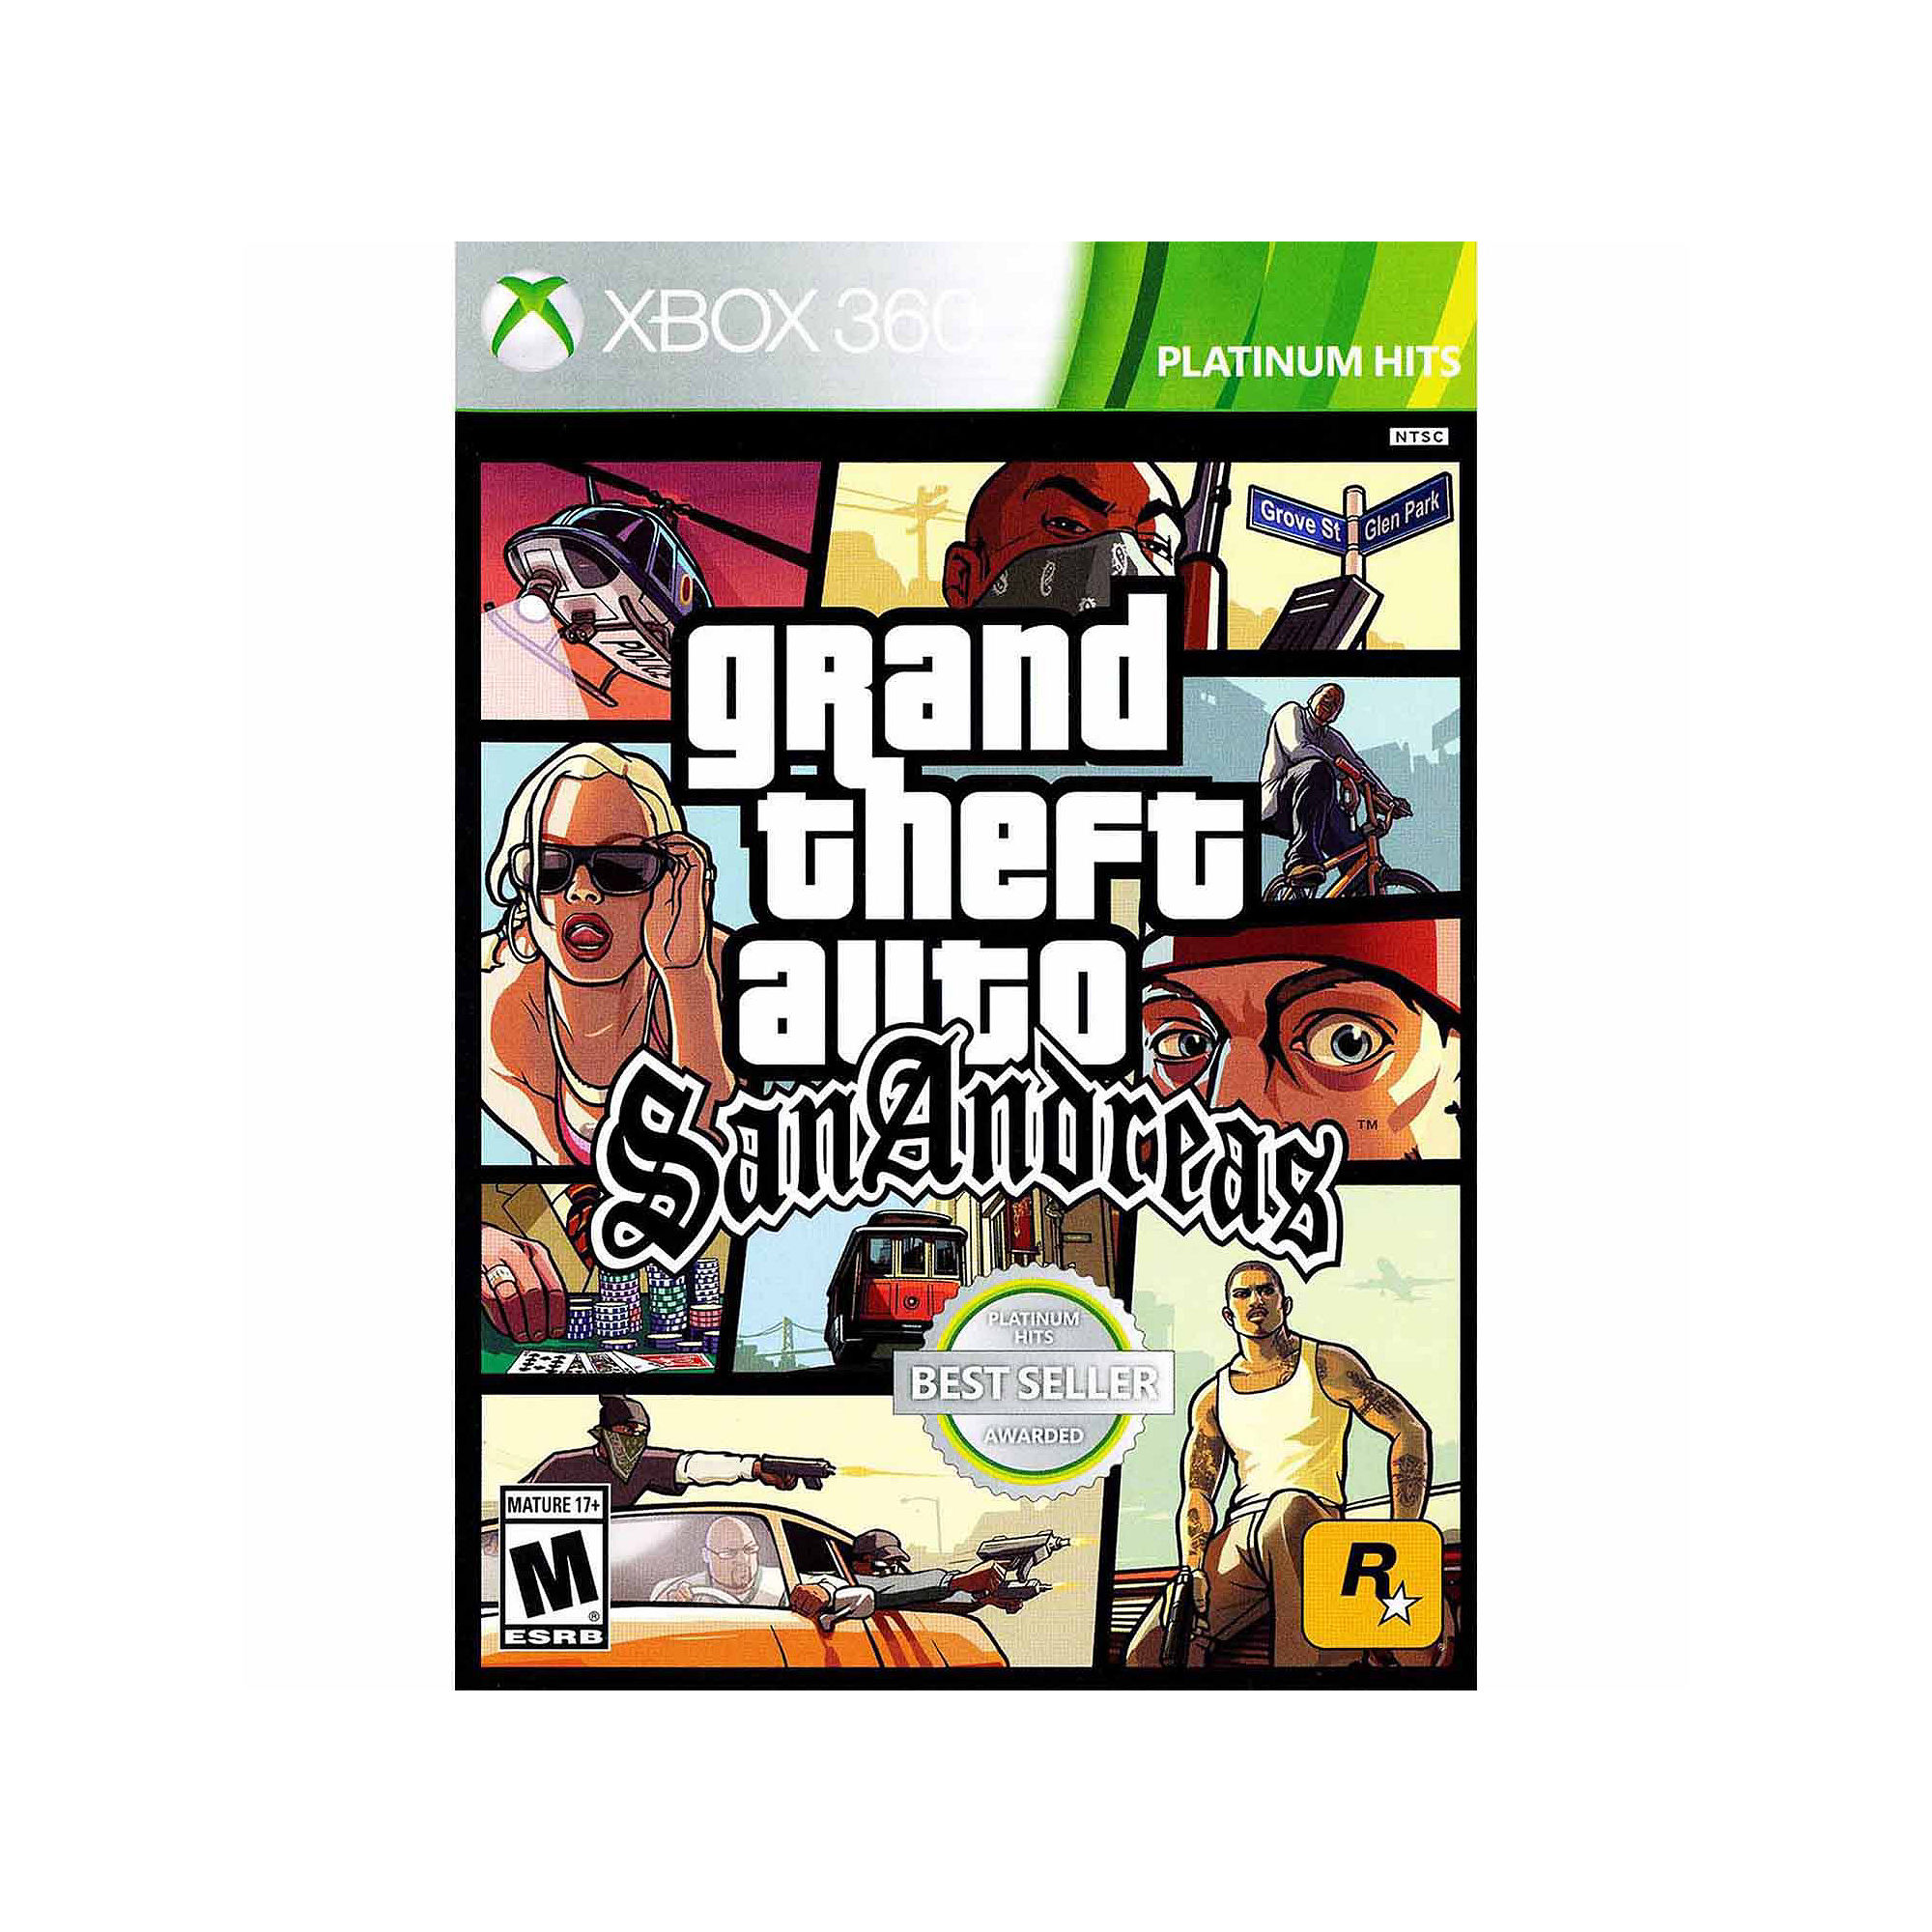 Grand Theft Auto: San Andreas, Rockstar Games, Xbox 360, 710425495649 - image 1 of 4